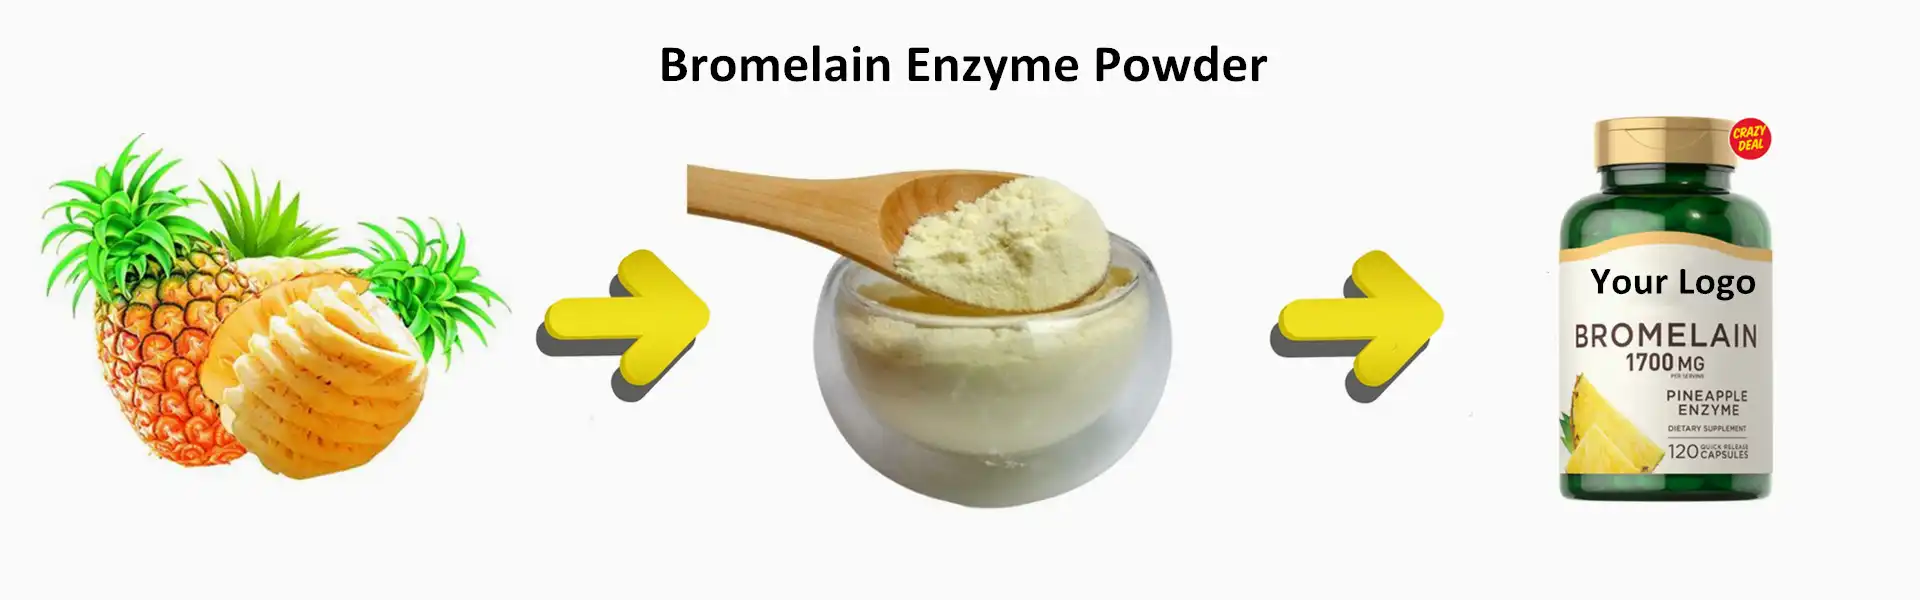 Bromelain enzyme powder